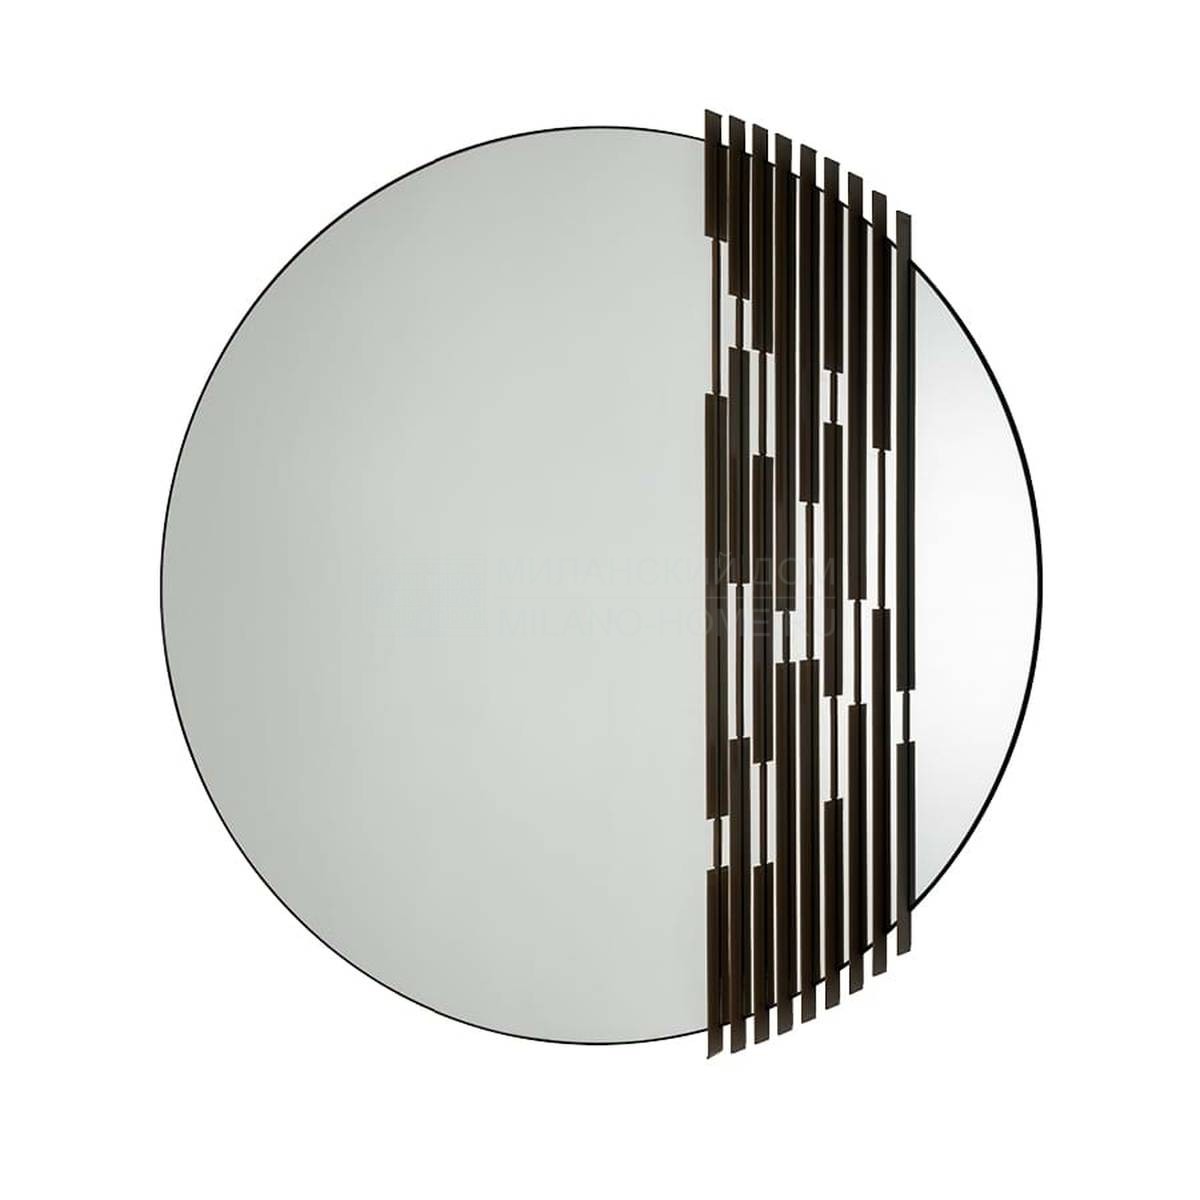 Зеркало настенное Rift 60050-55-60-65 из Италии фабрики GIORGETTI